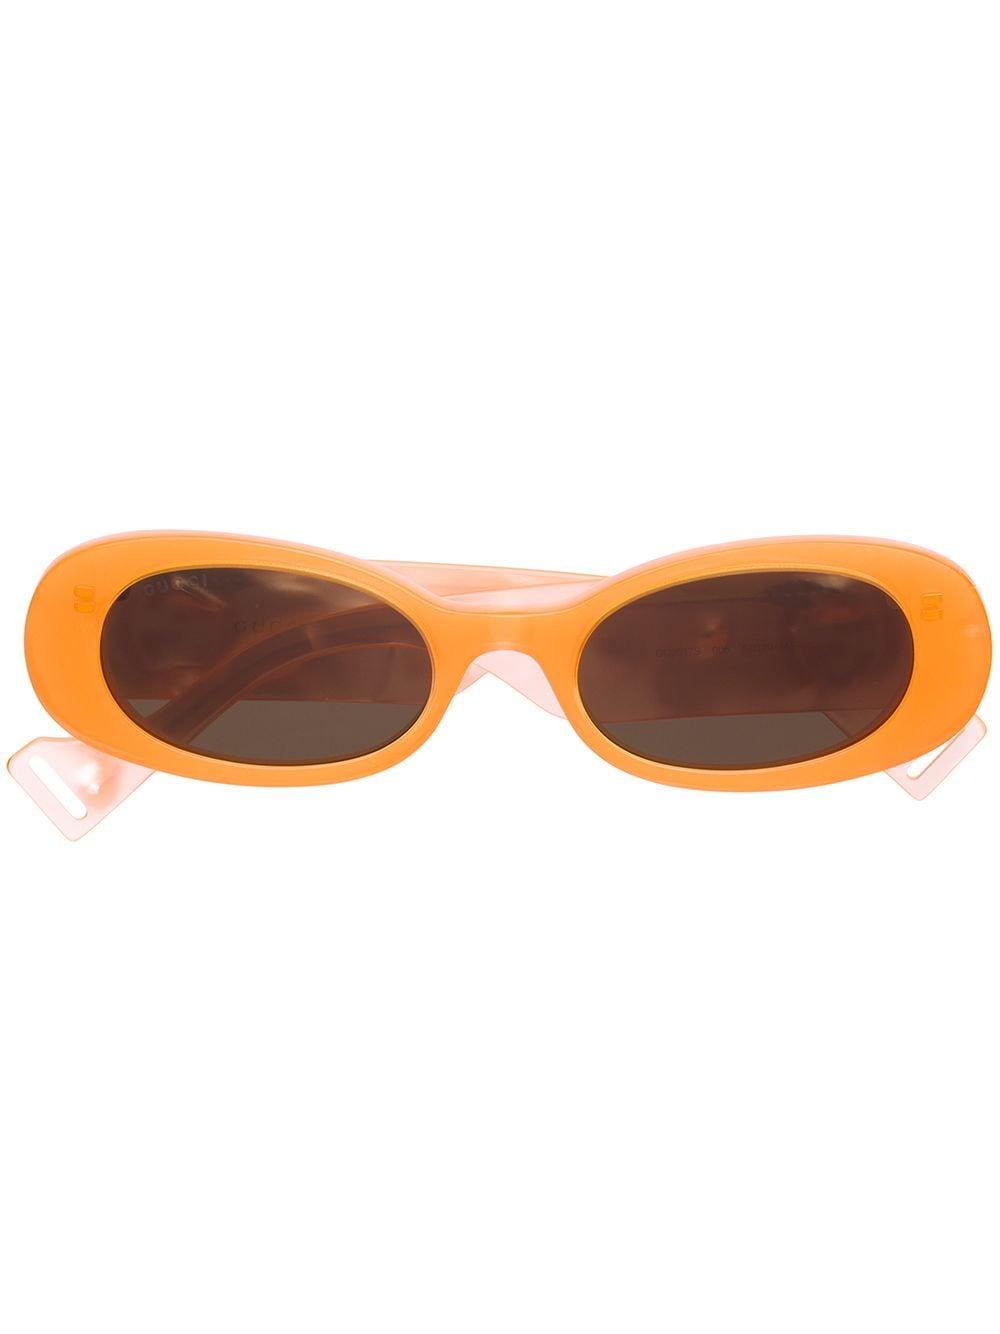 Gucci Oval-frame Sunglasses in Orange | Lyst